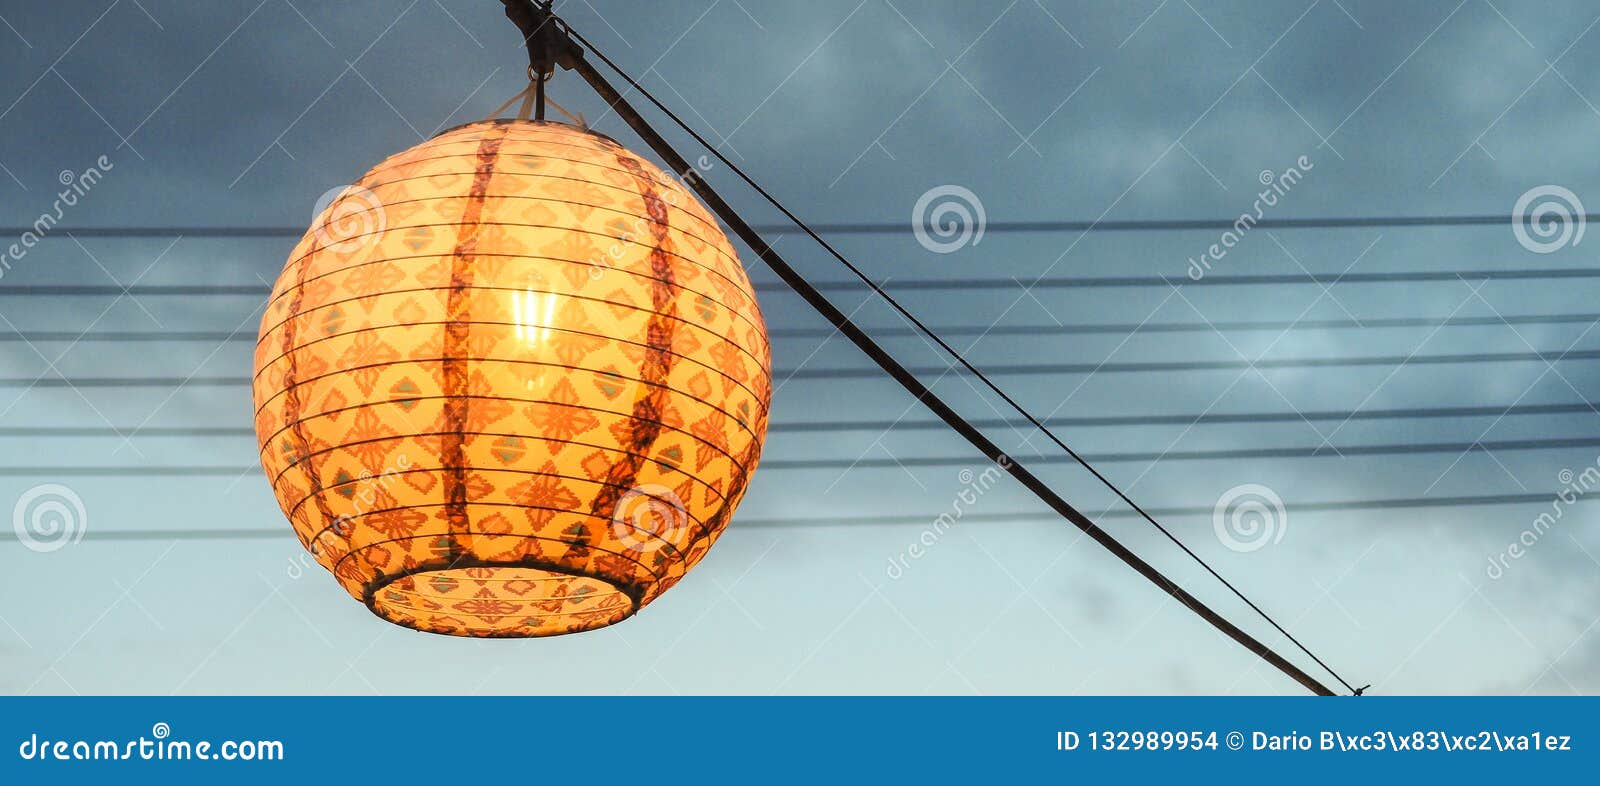 chinese lamp that illuminates the restaurant.